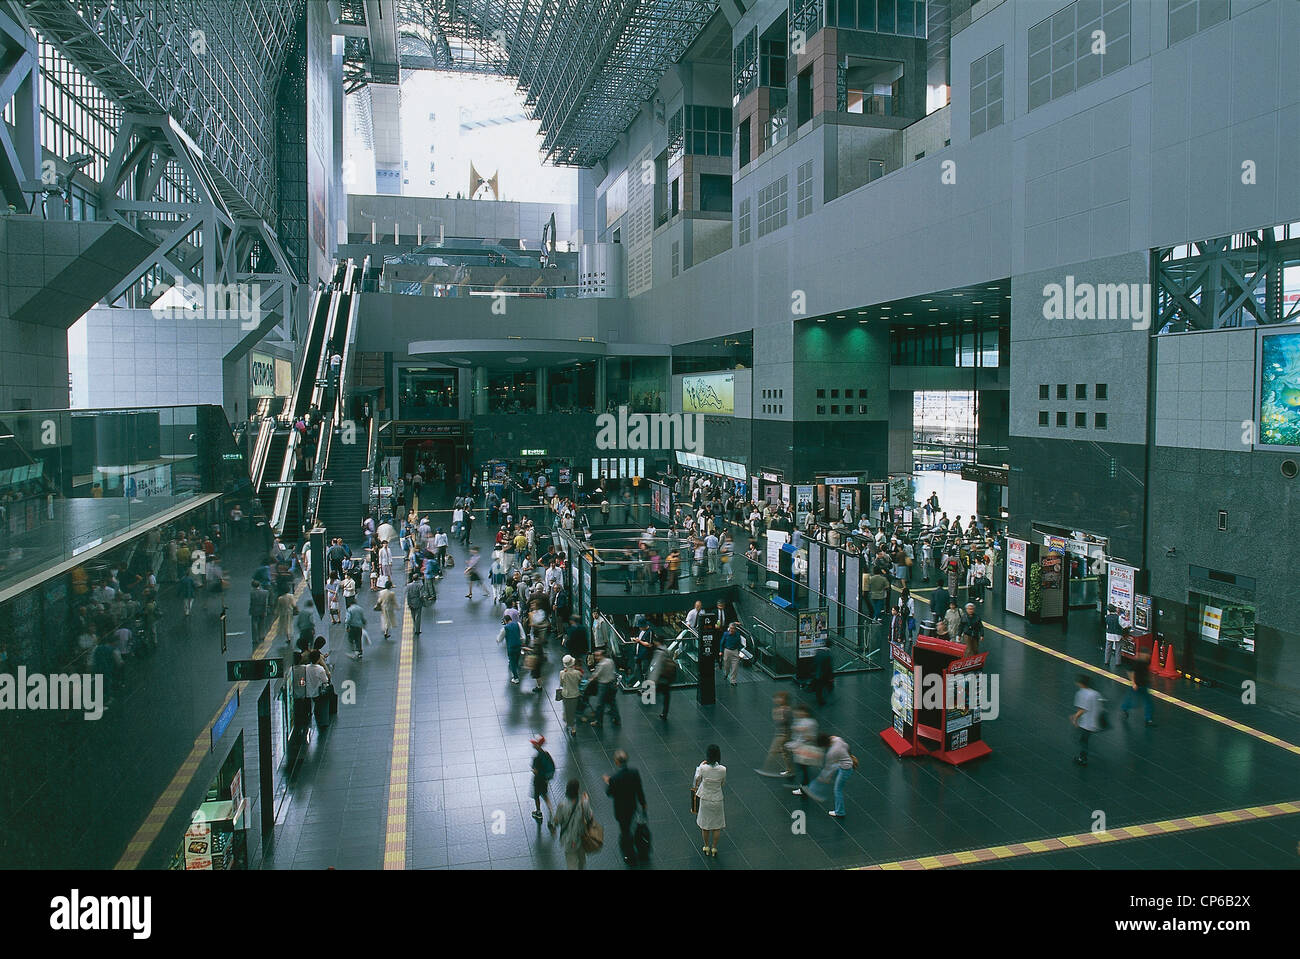 Japan - Kansai - Kyoto station. Stock Photo